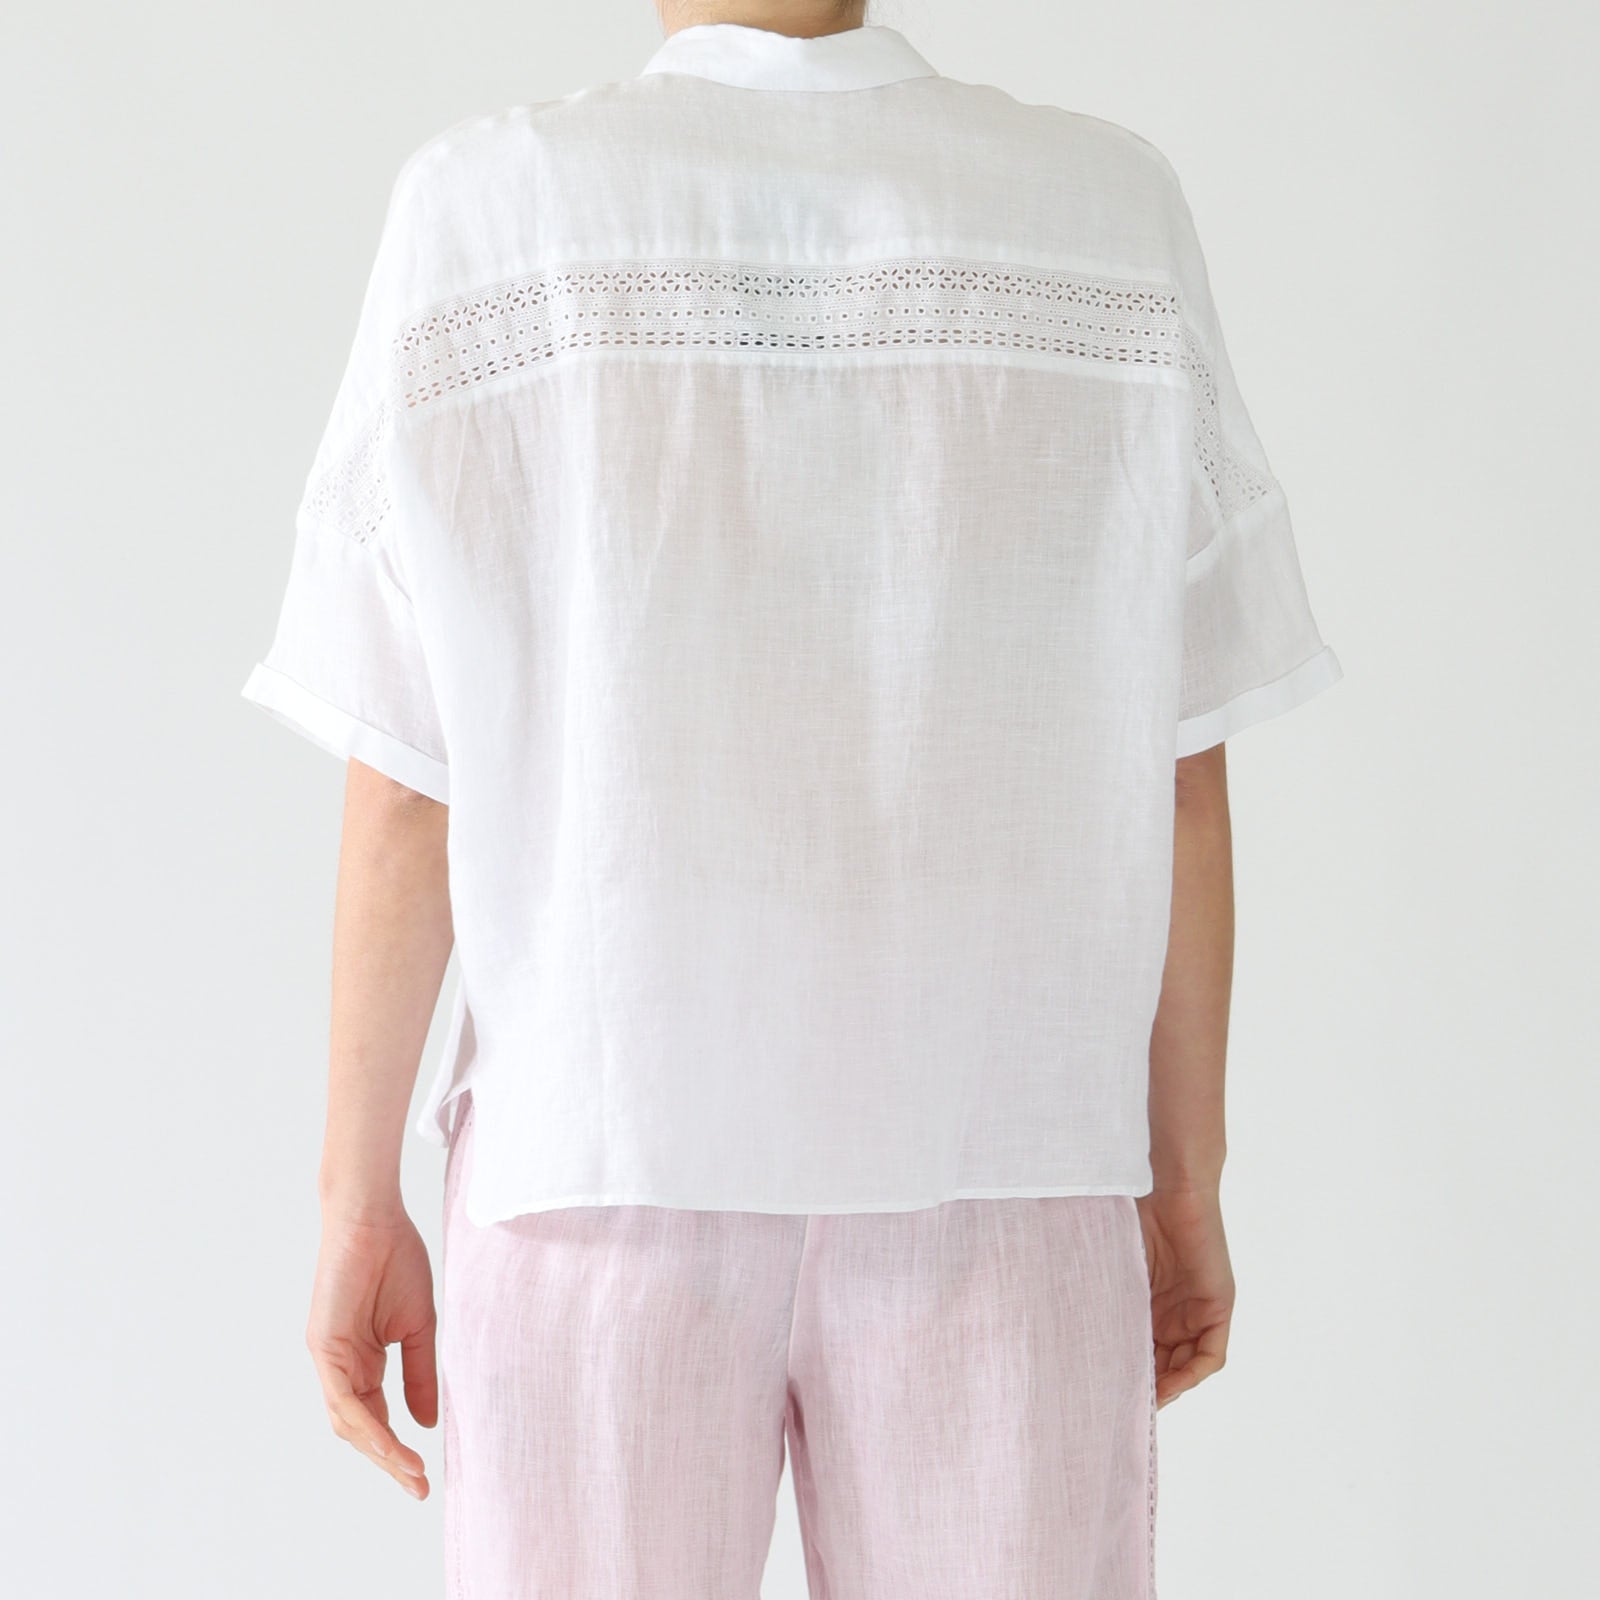 White Linen Shirt With Lace Yoke